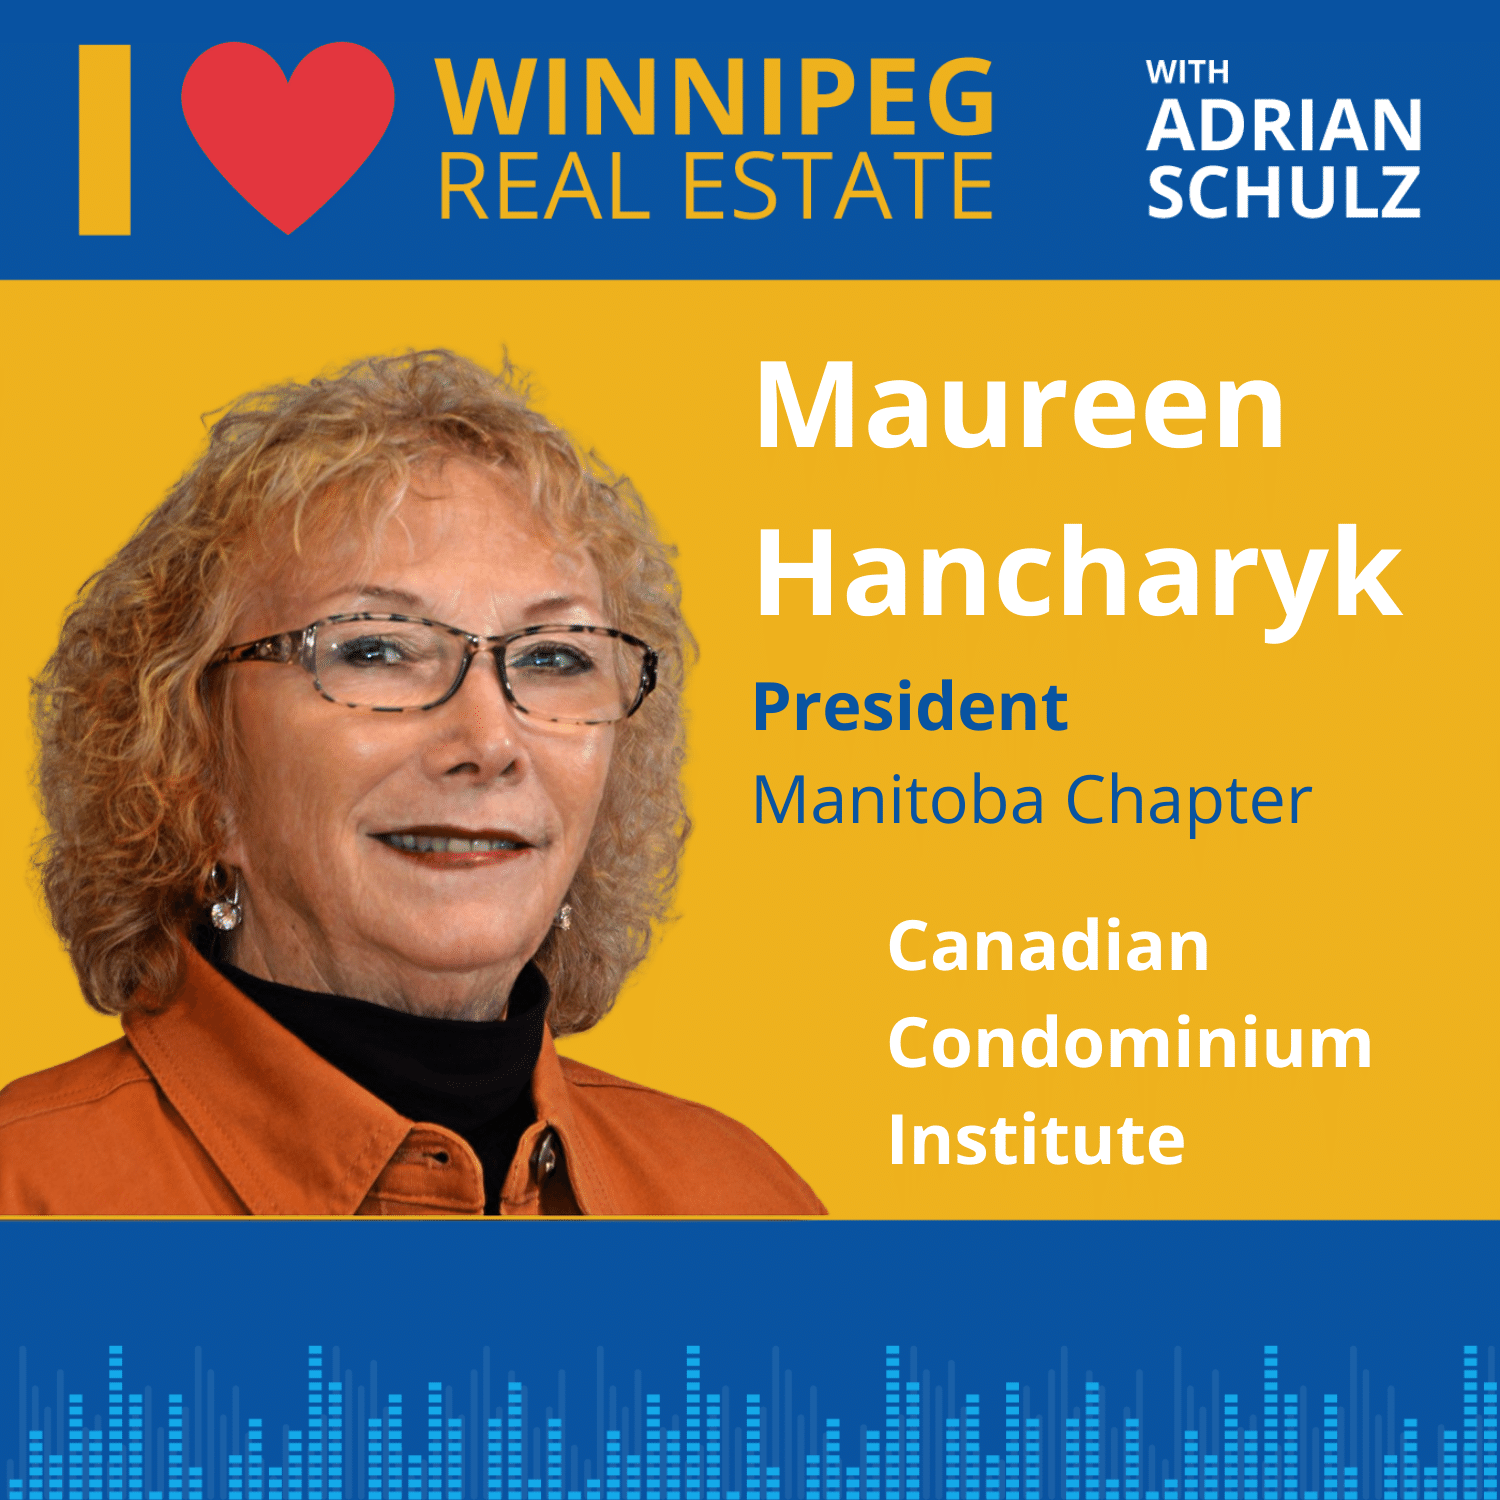 Maureen Hancharyk on the Canadian Condominium Institute Image